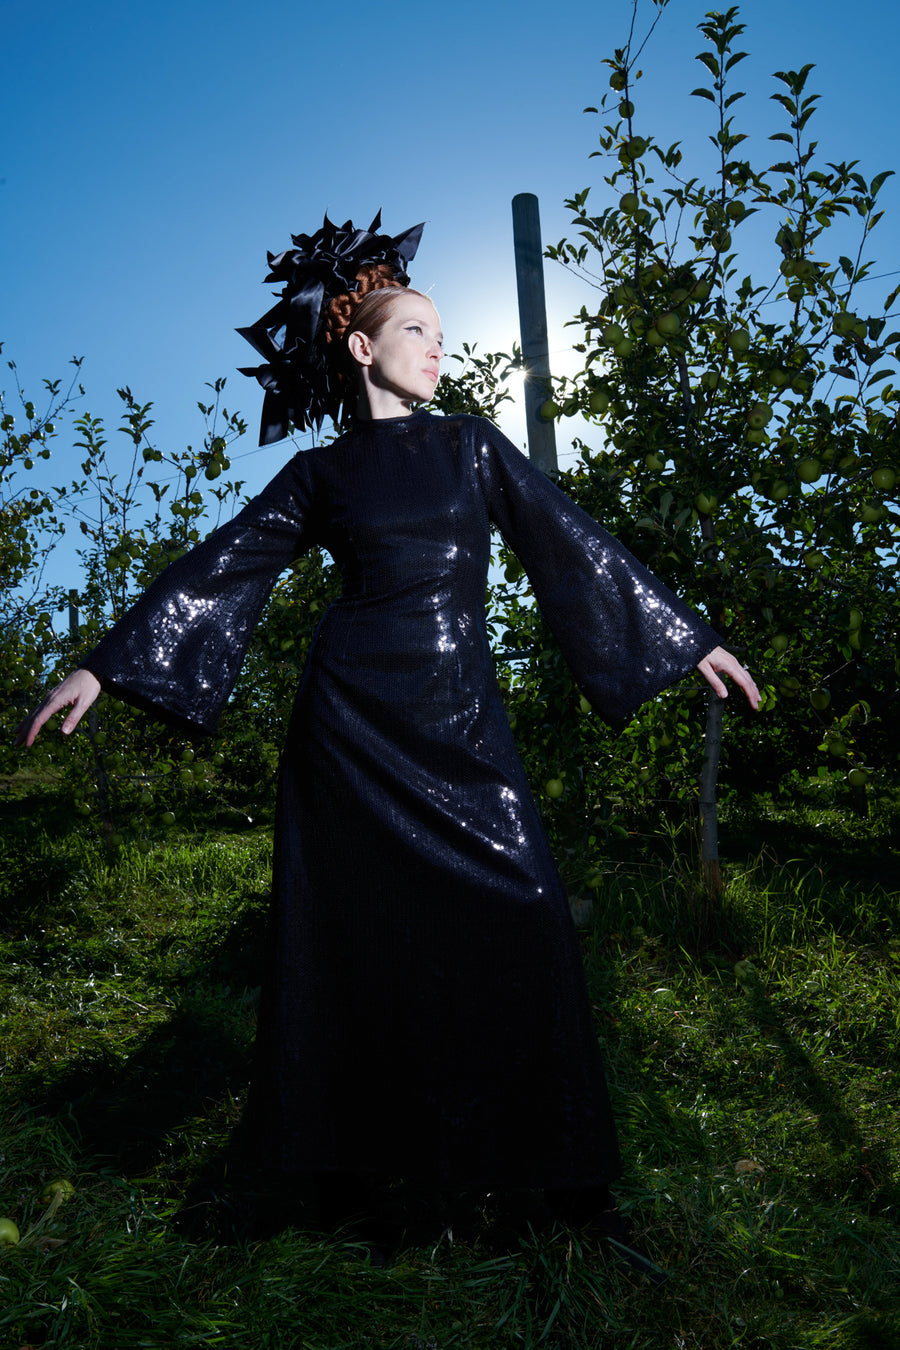 BATSHEVA - Dolly Dress in Black Sequin